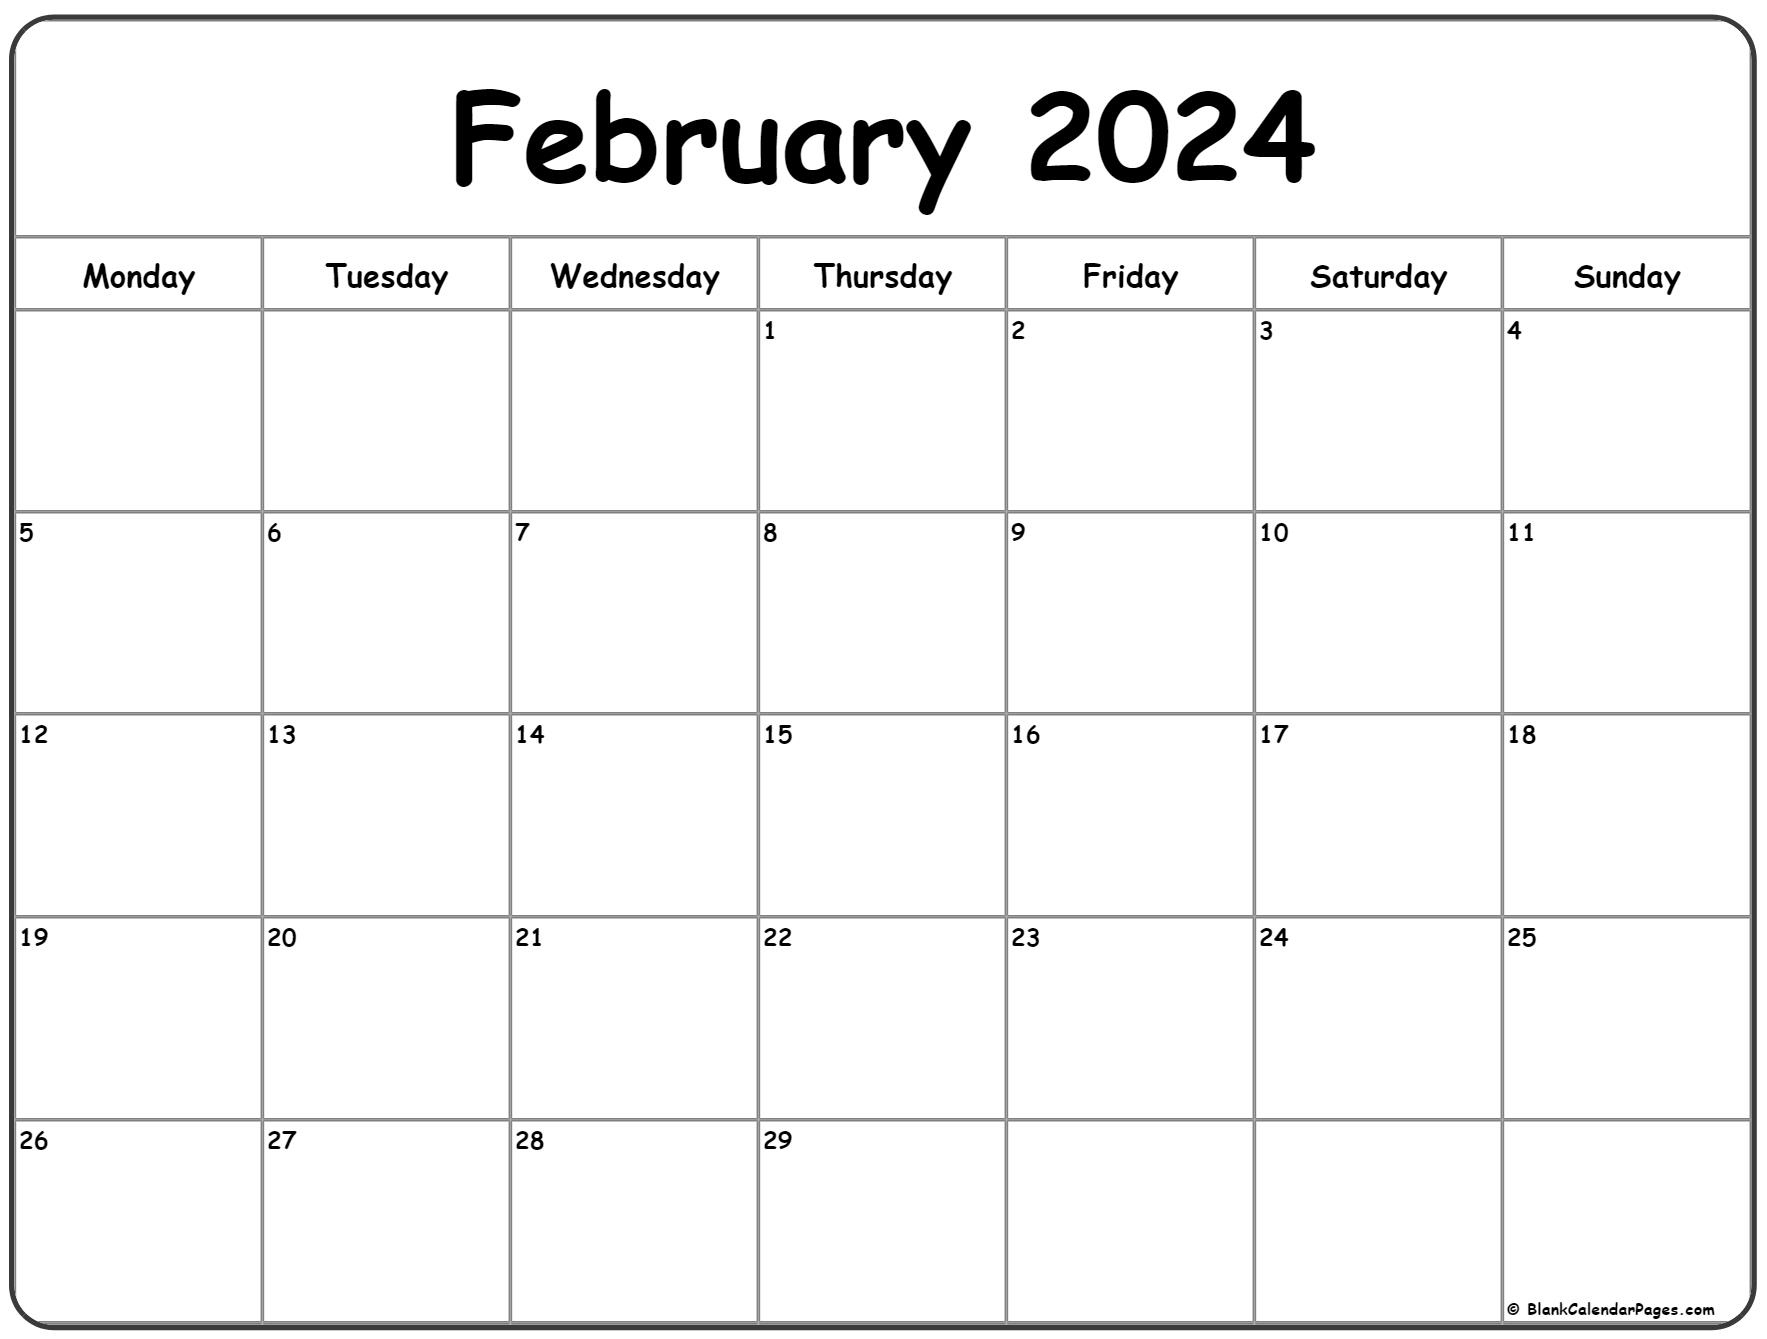 February 2024 Monday Calendar | Monday To Sunday | Printable Calendar 2024 February Month